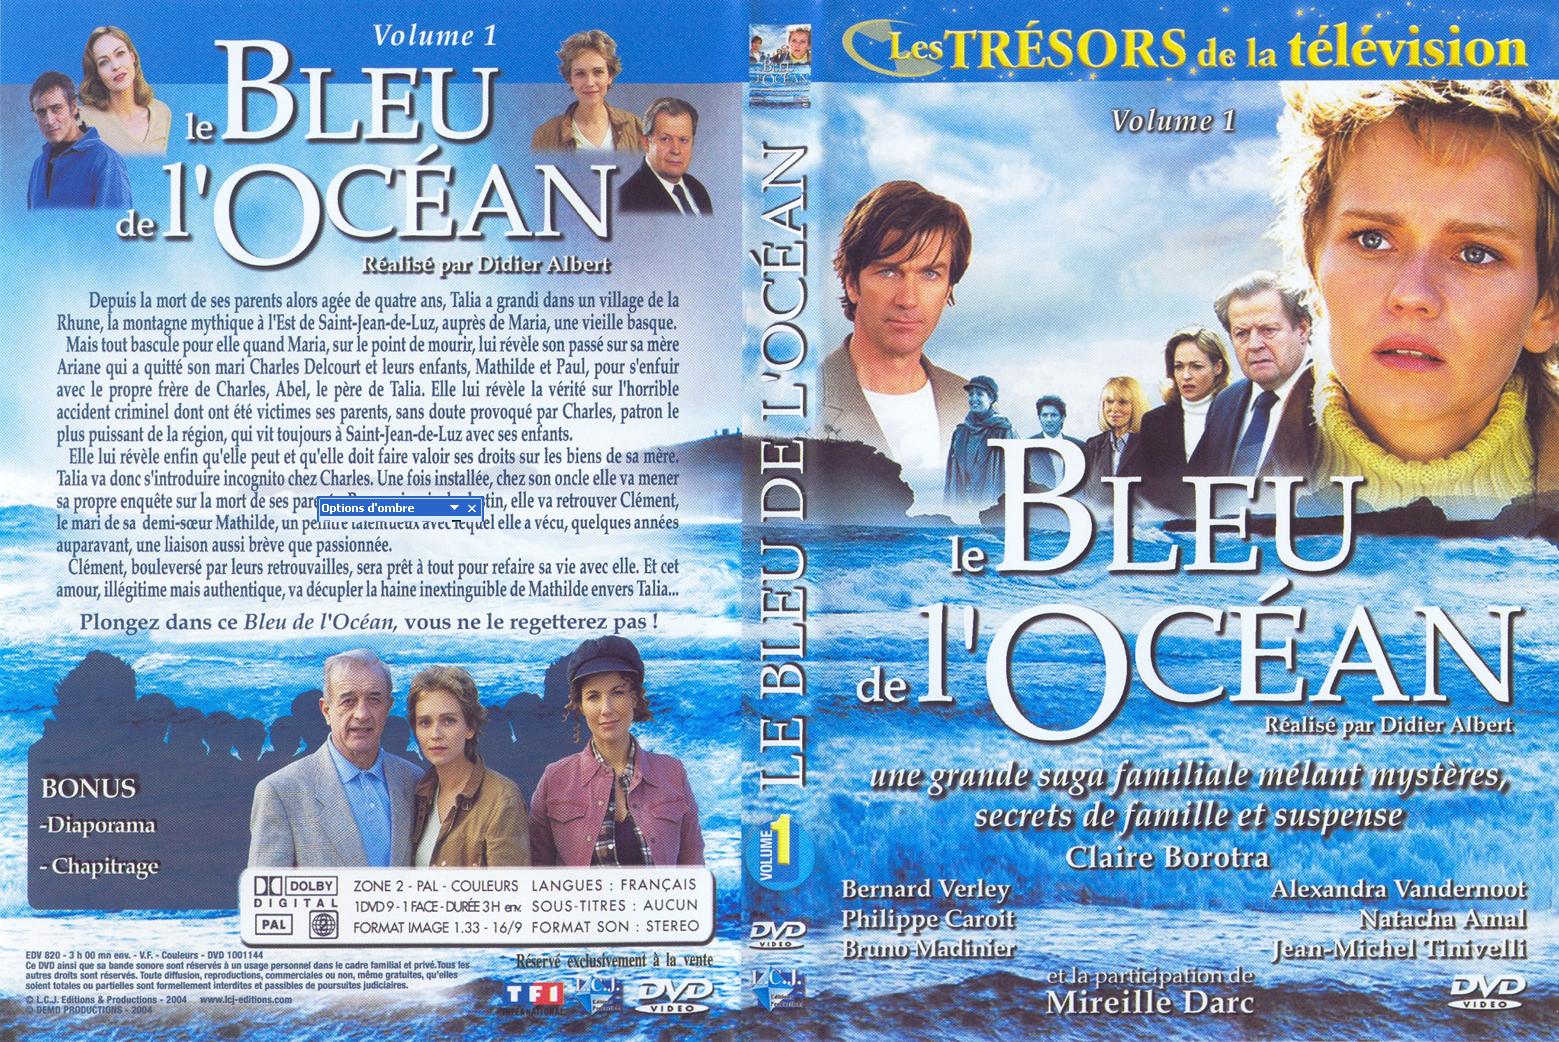 Le bleu de l'ocean movie